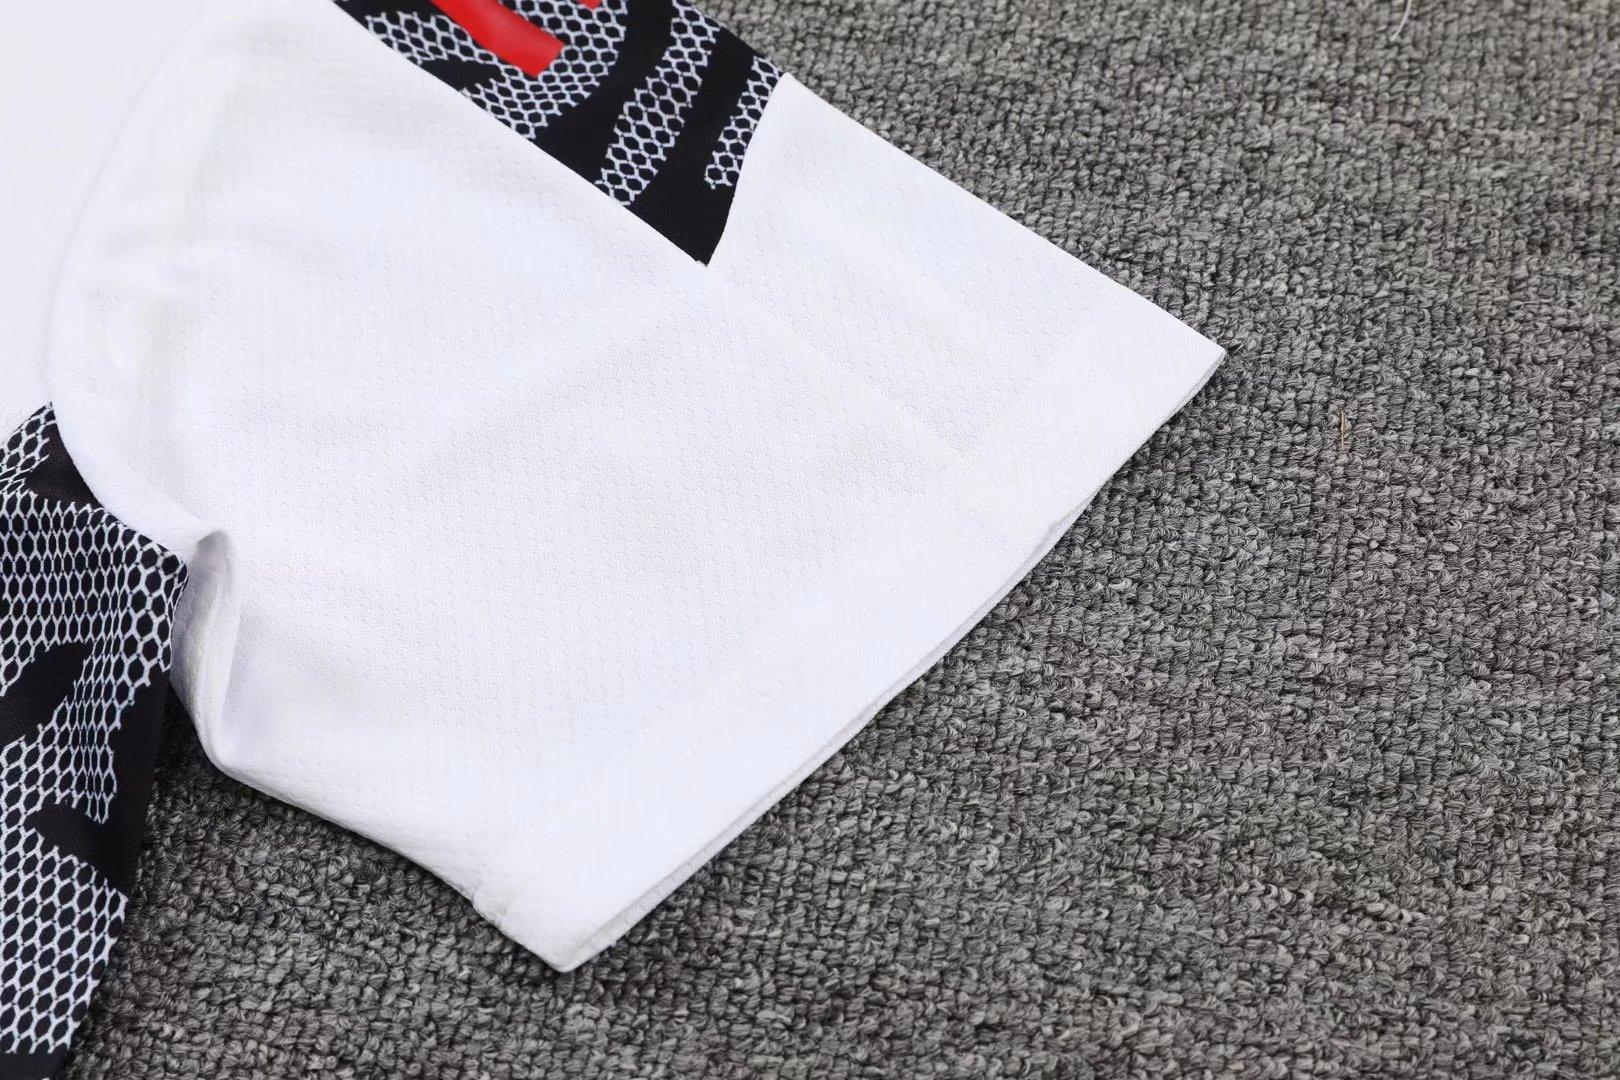 Bayern Munich Soccer Training Suit Jersey + Pants Replica White Mens 2021-22